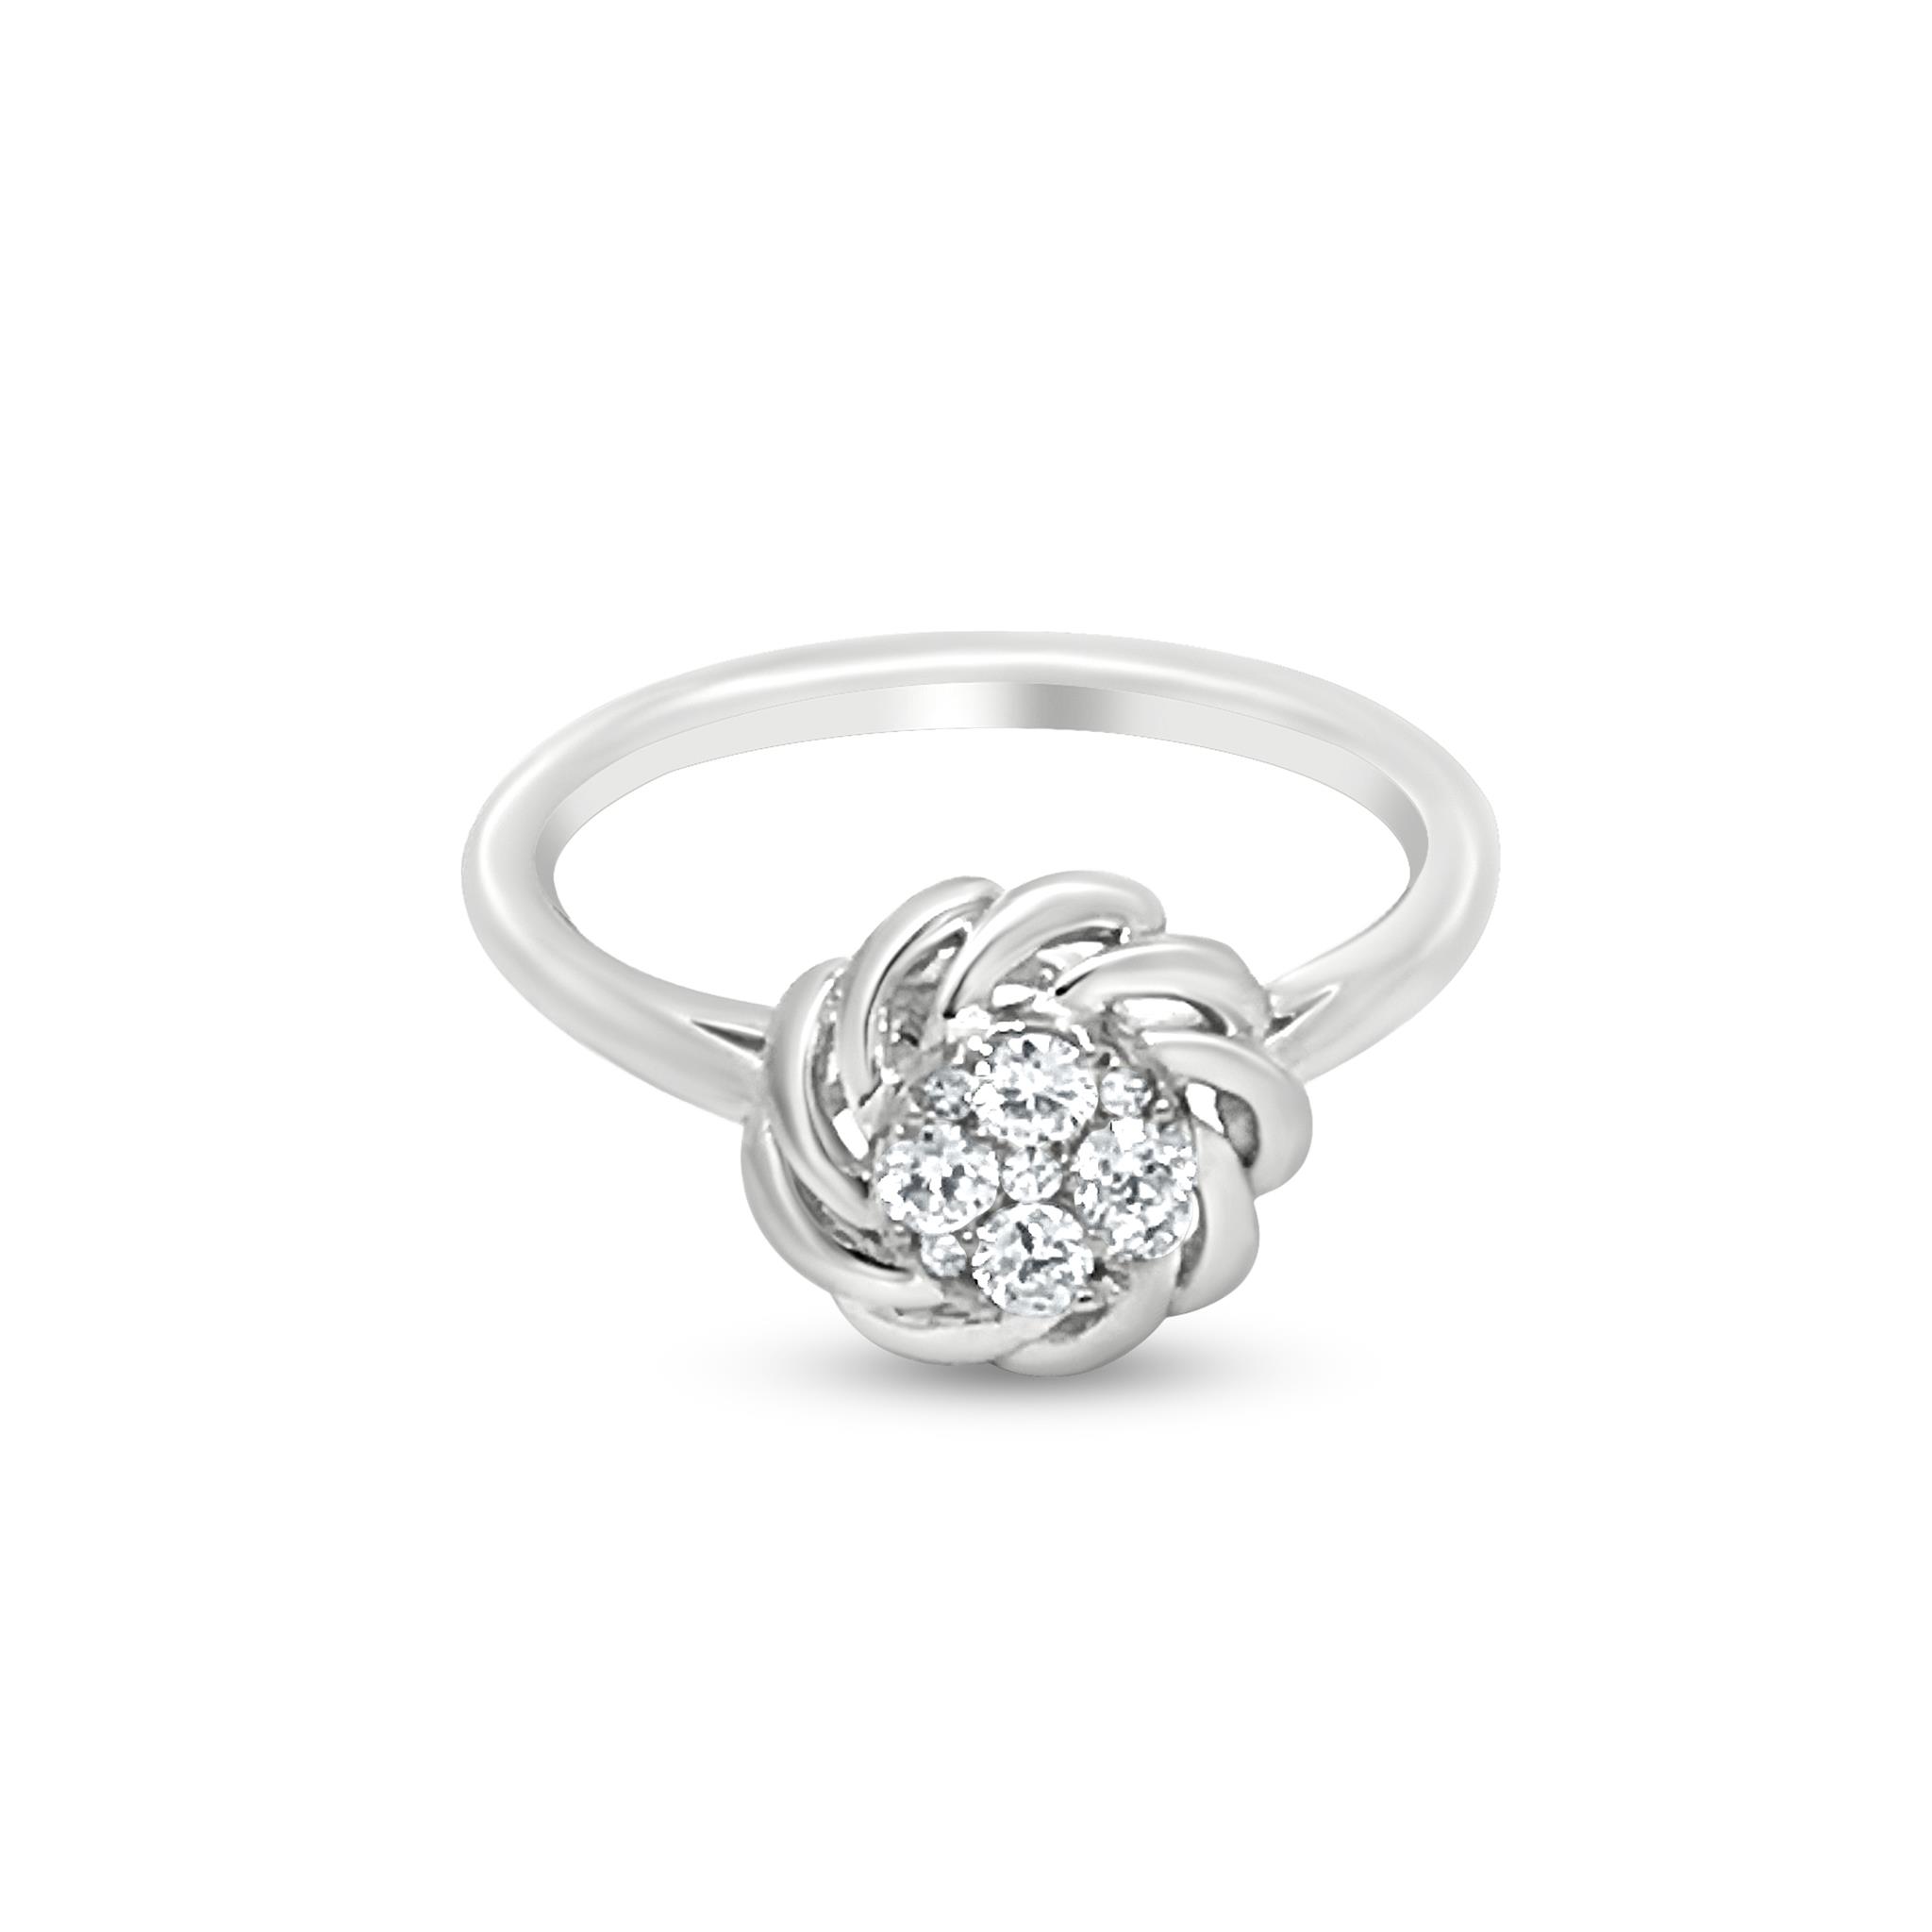 Never Fade Original PT950 Platinum Rings 1ct Round D Color VVS1 Moissanite  Diamond Eternal Rings Wedding Accessories for Women